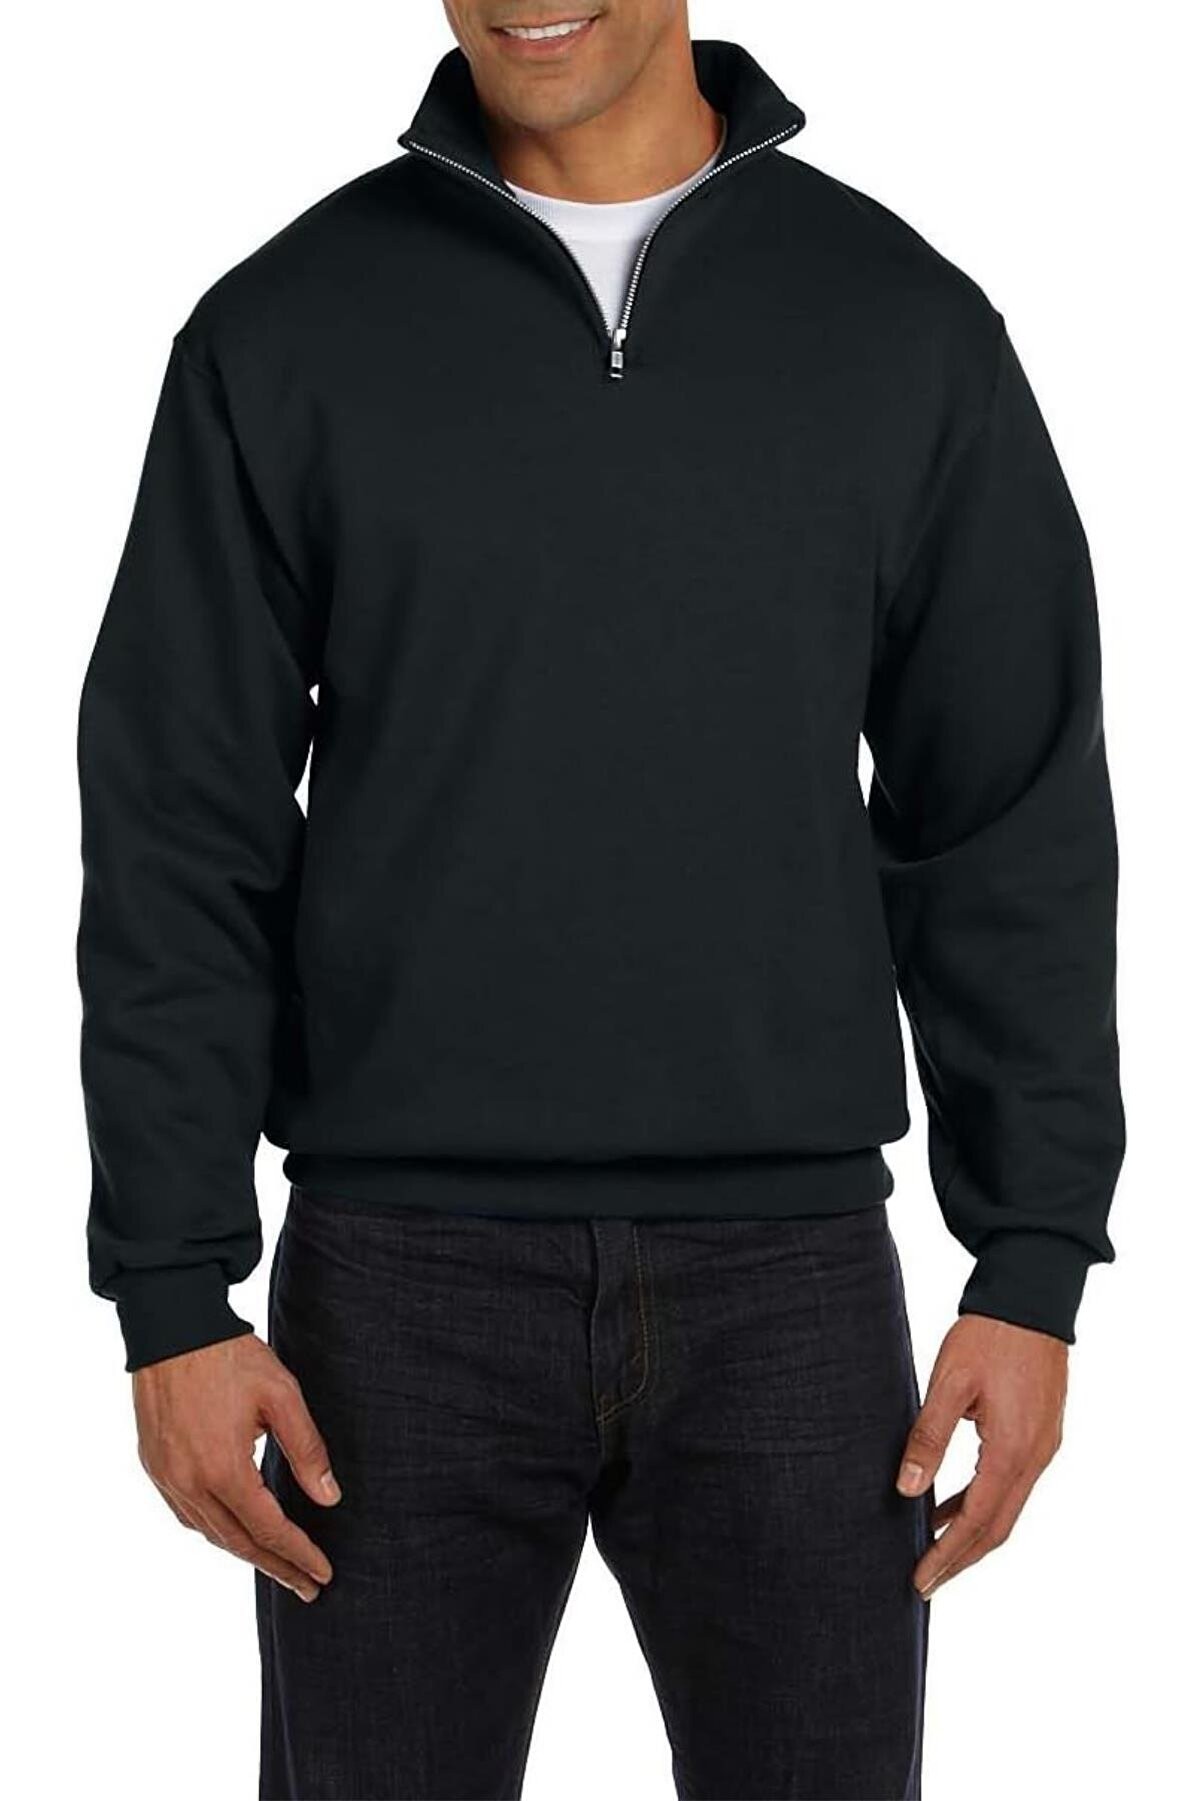 Ghassy Co Erkek Dik Yaka Silver Yarım Fermuarlı Sweatshirt - Siyah